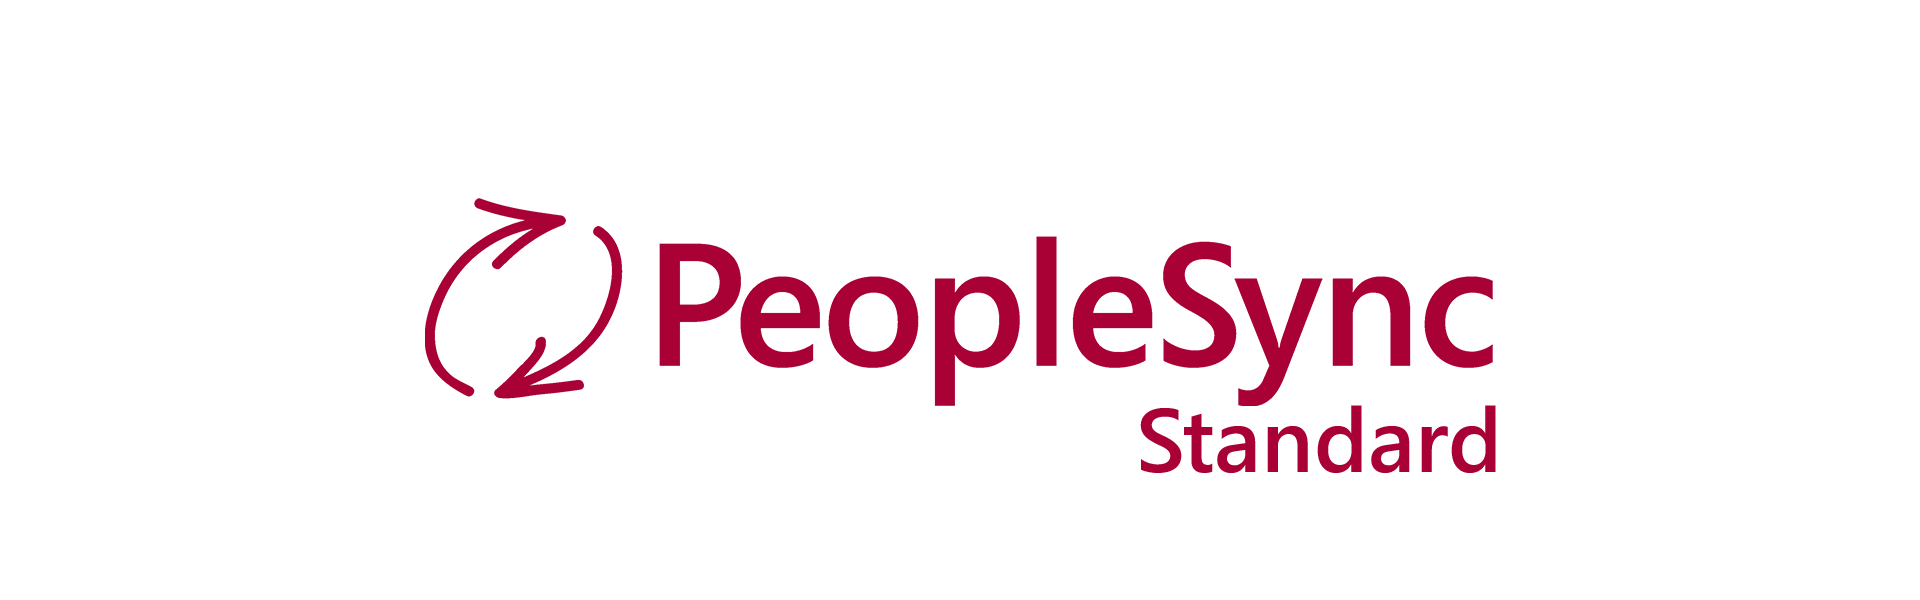 messageconcept peoplesync standard edition logo